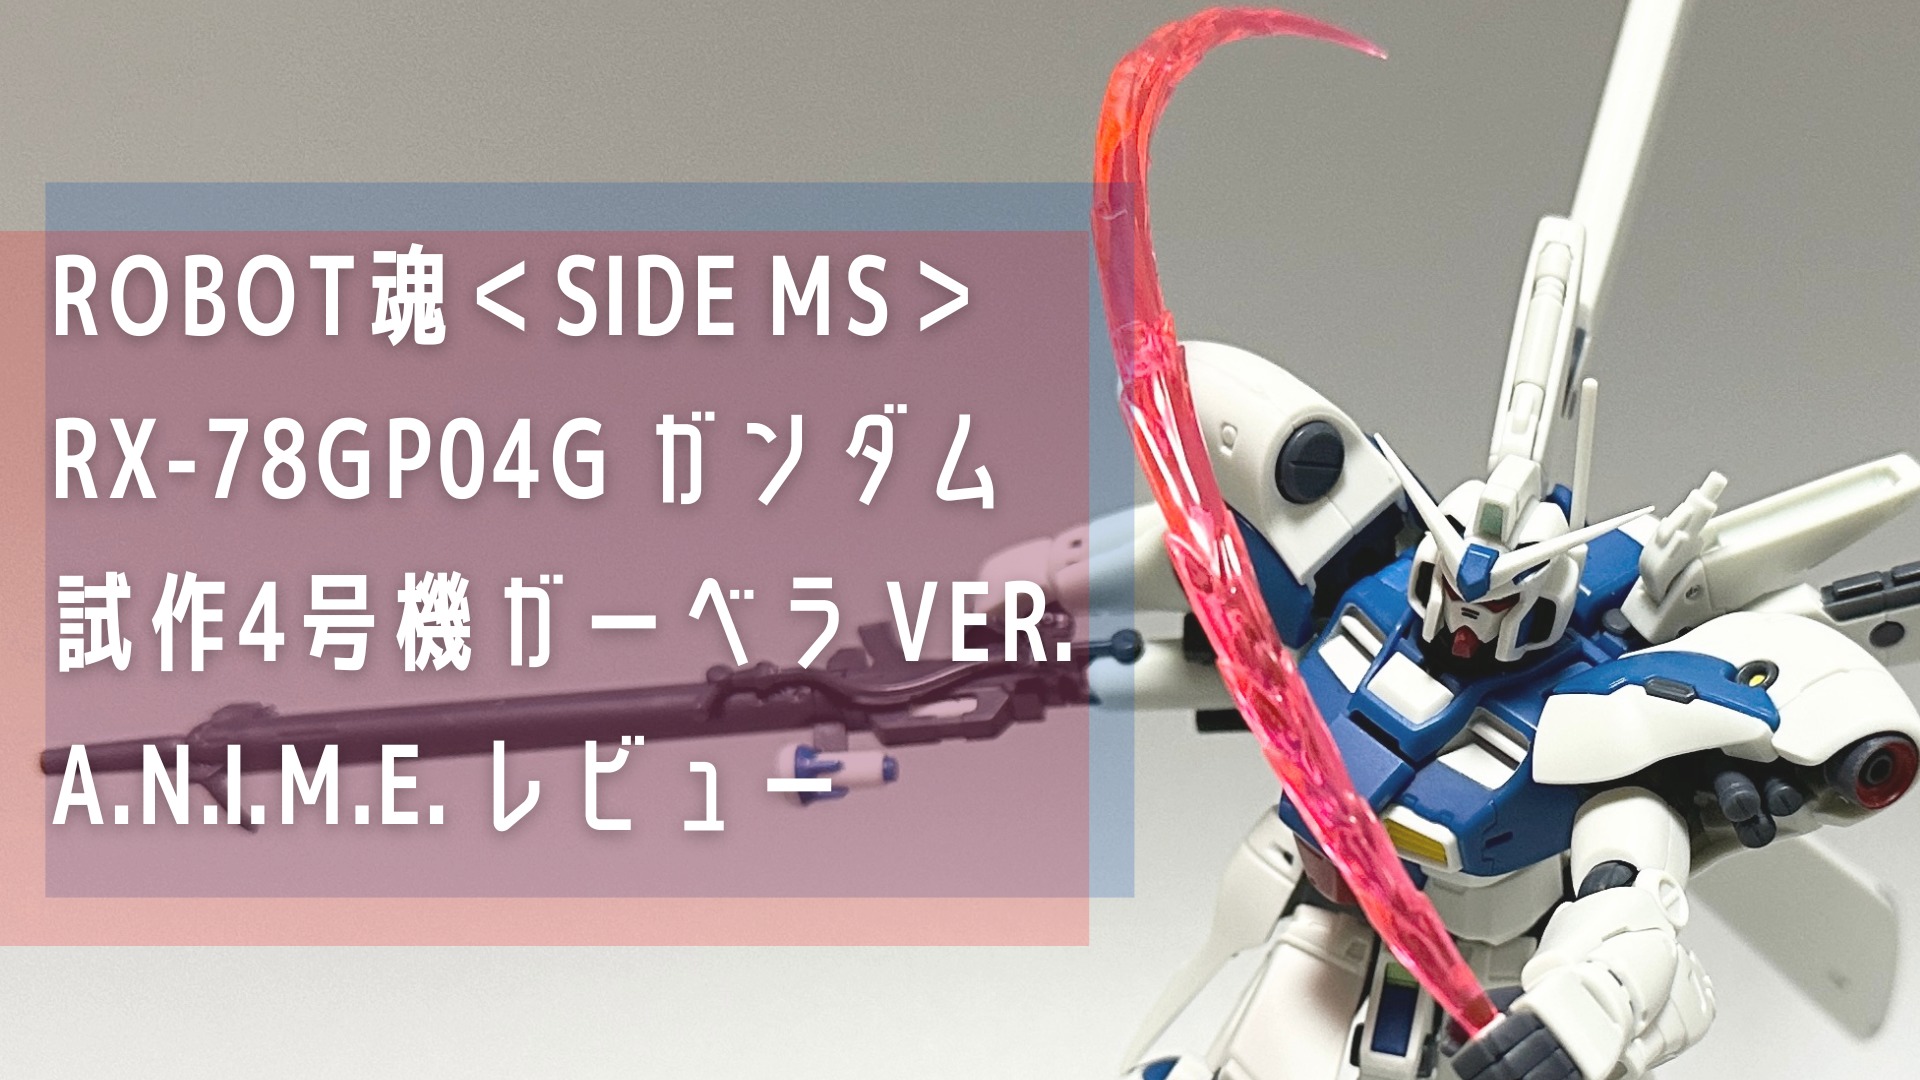 ROBOT魂＜SIDE MS＞ RX-78GP04G ガンダム試作4号機ガーベラ ver. A.N.I.M.E. レビュー アイキャッチ画像